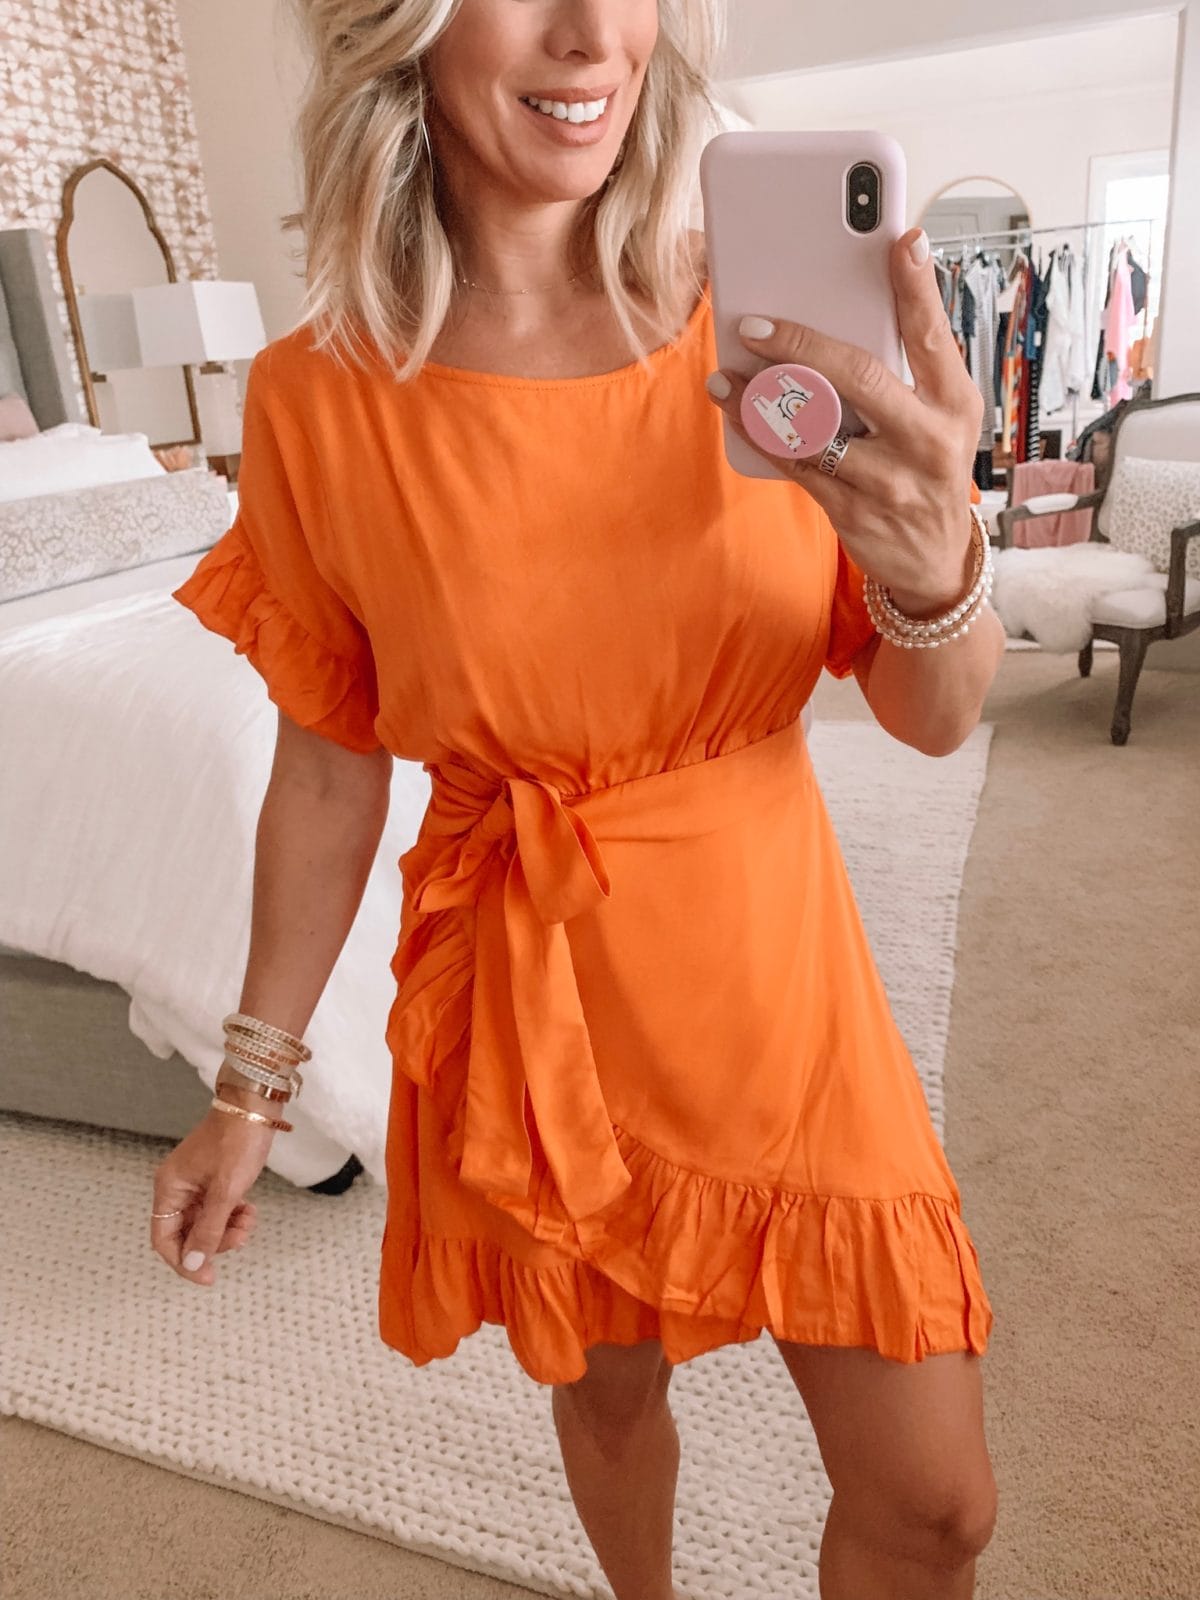 Amazon Fashion Haul - Orange wrap dress